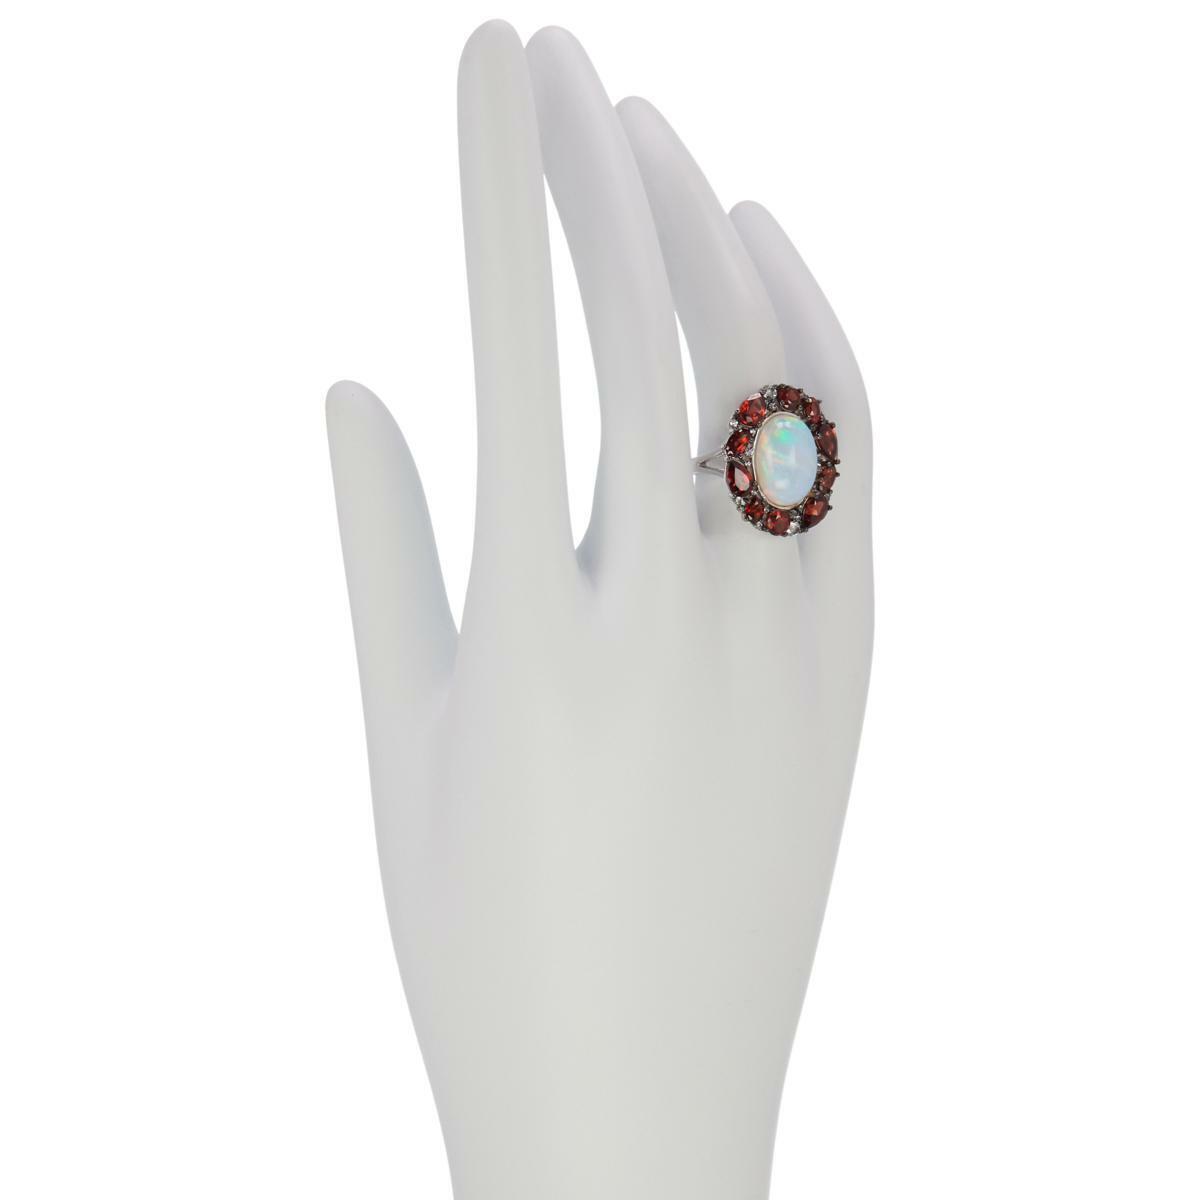 Paul Deasy Gem Opal, Garnet & White Topaz Sterling Silver Oval Ring Size 6